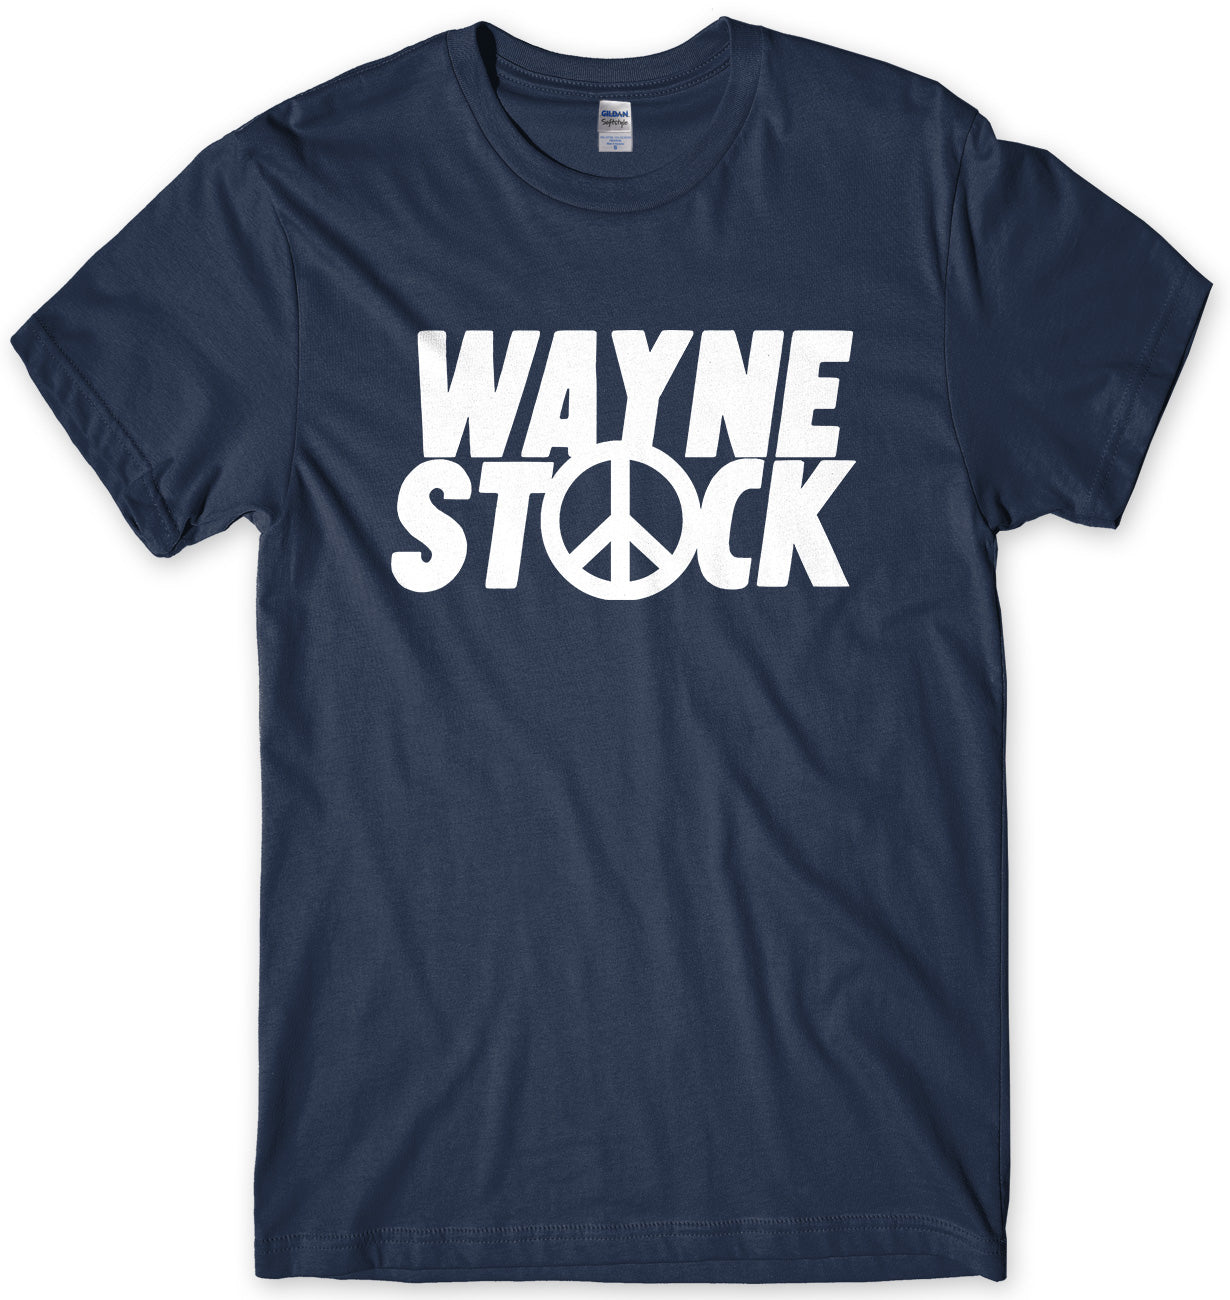 WAYNE STOCK - INSPIRED BY WAYNE'S WORLD 2 MENS UNISEX T-SHIRT